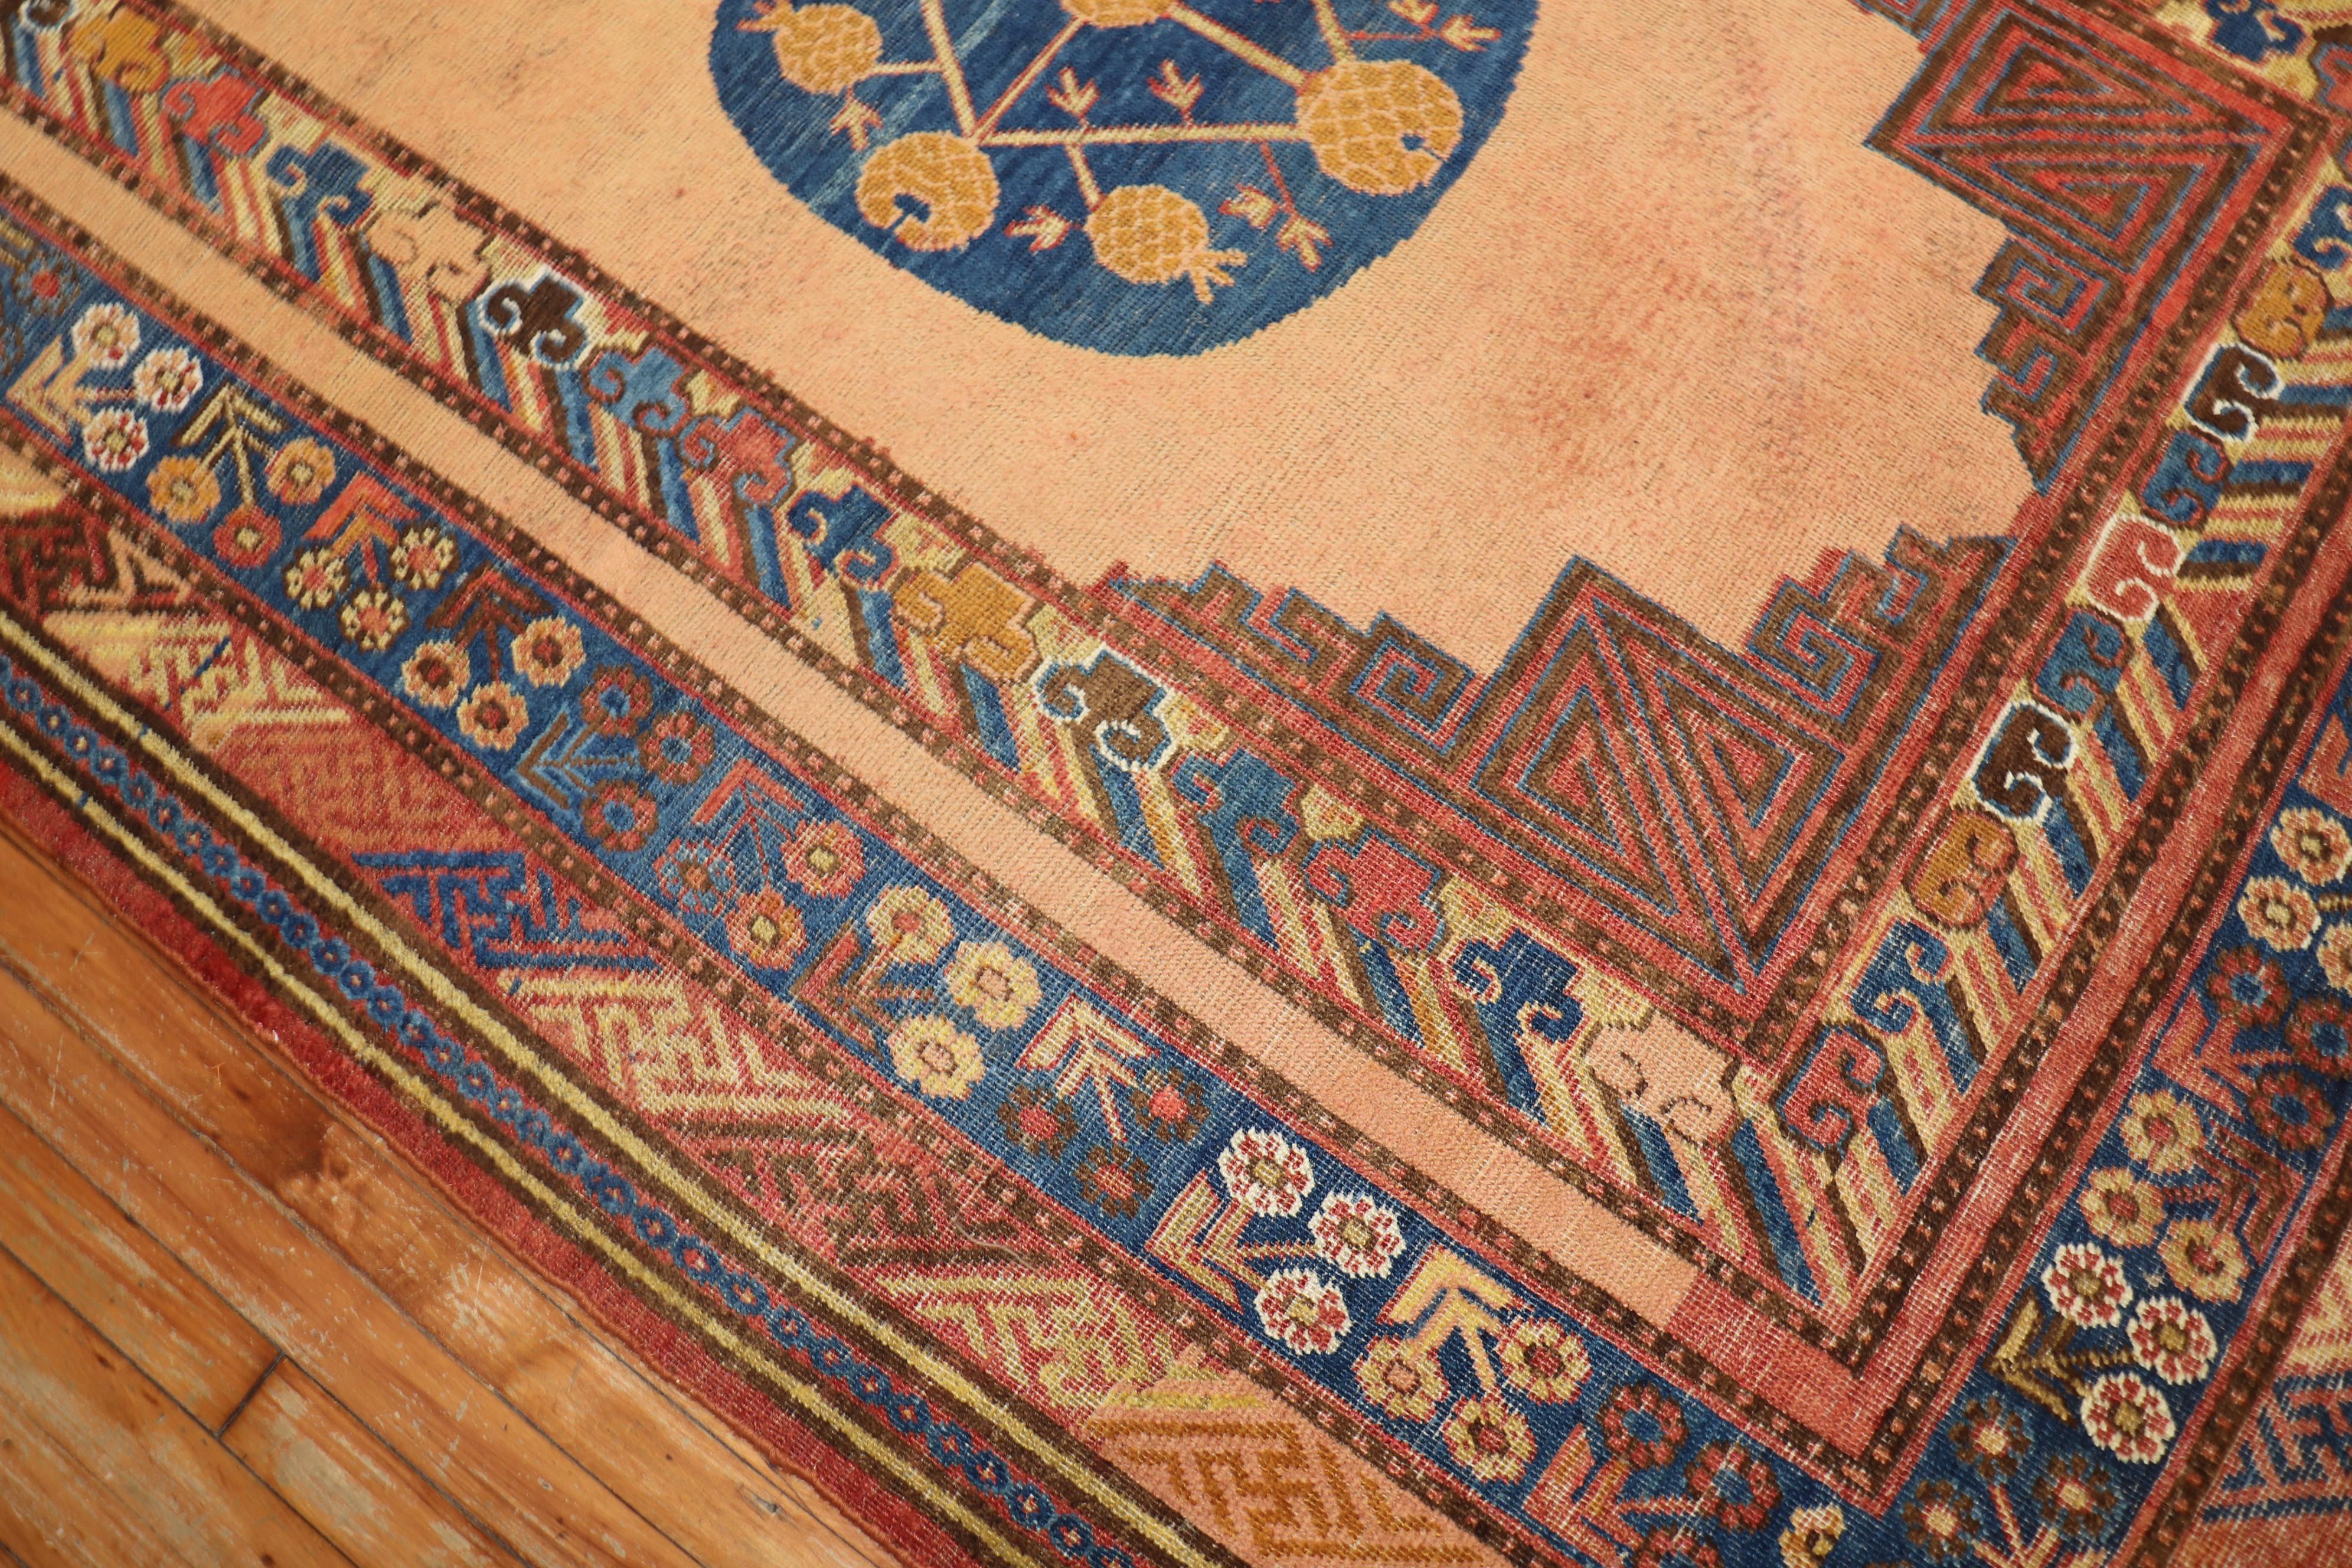 Exquisite 19th Century Antique East Turkestan Khotan Rug For Sale 1